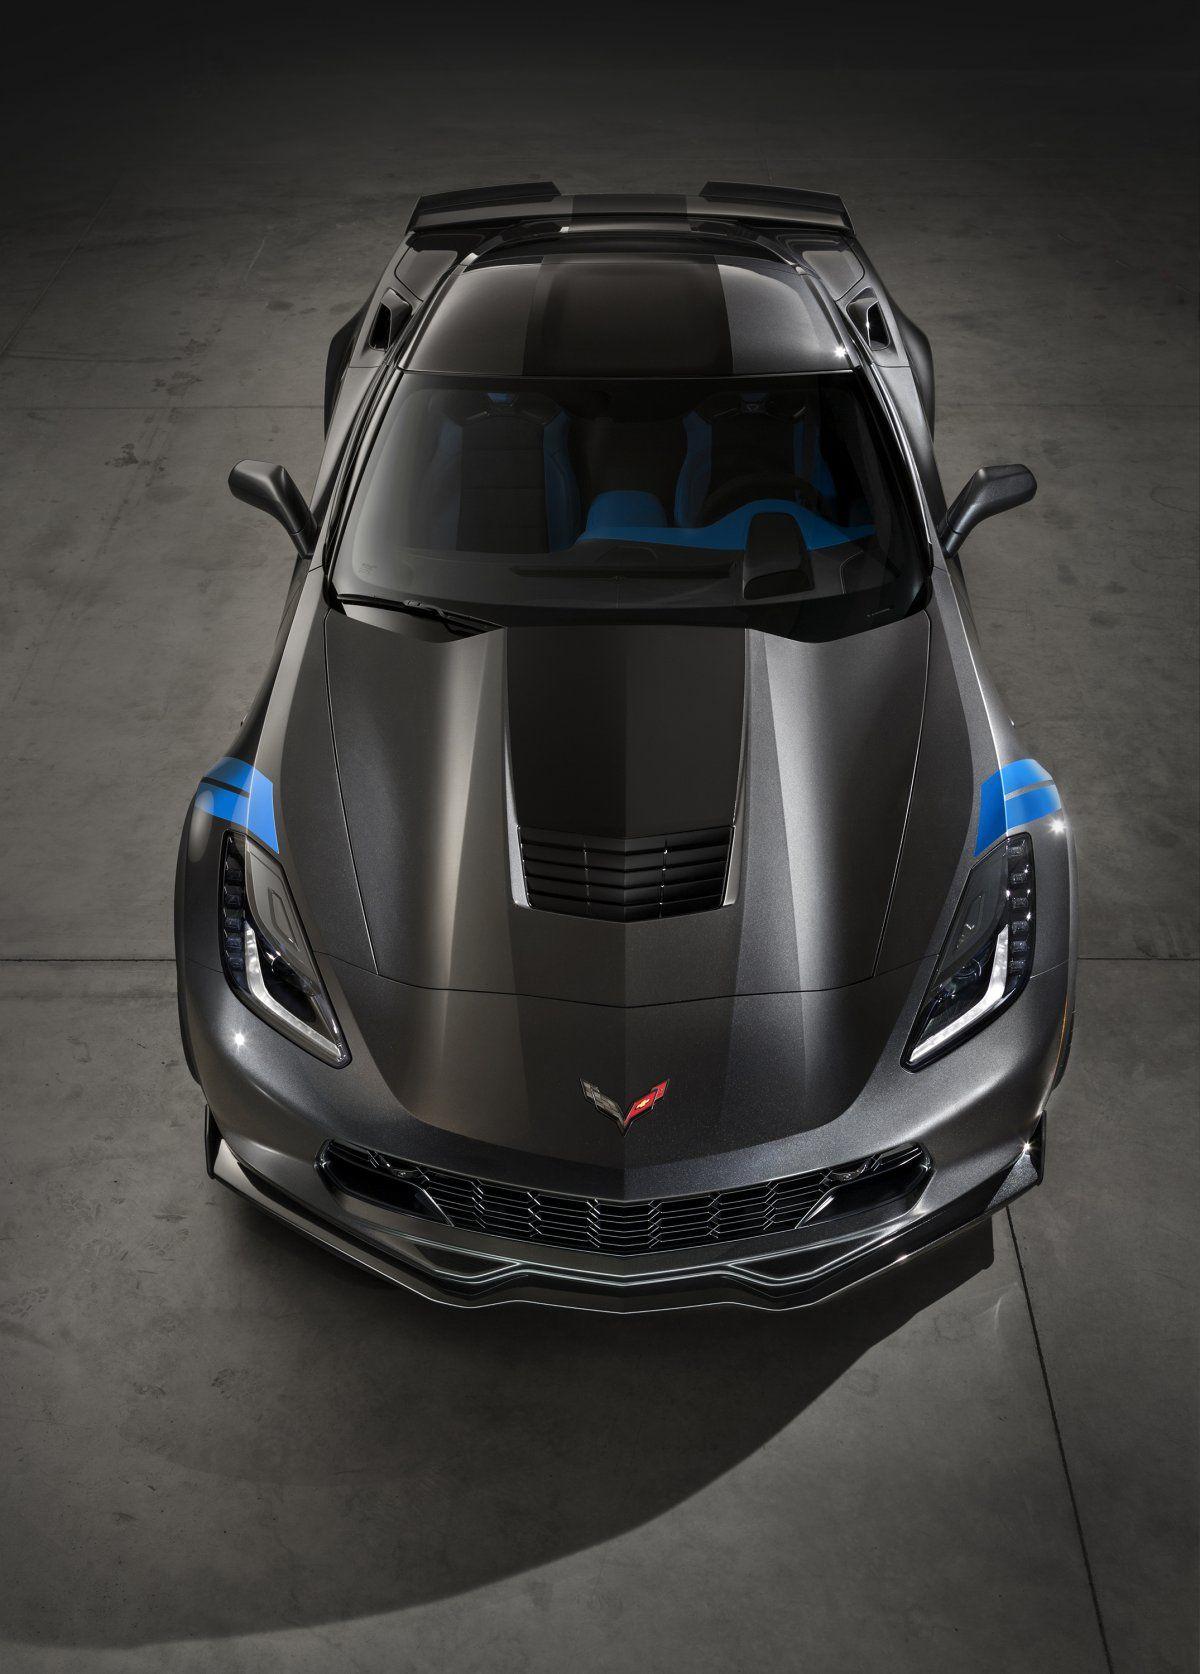 The 2017 Chevrolet Corvette Grand Sport looks just right. Diecast